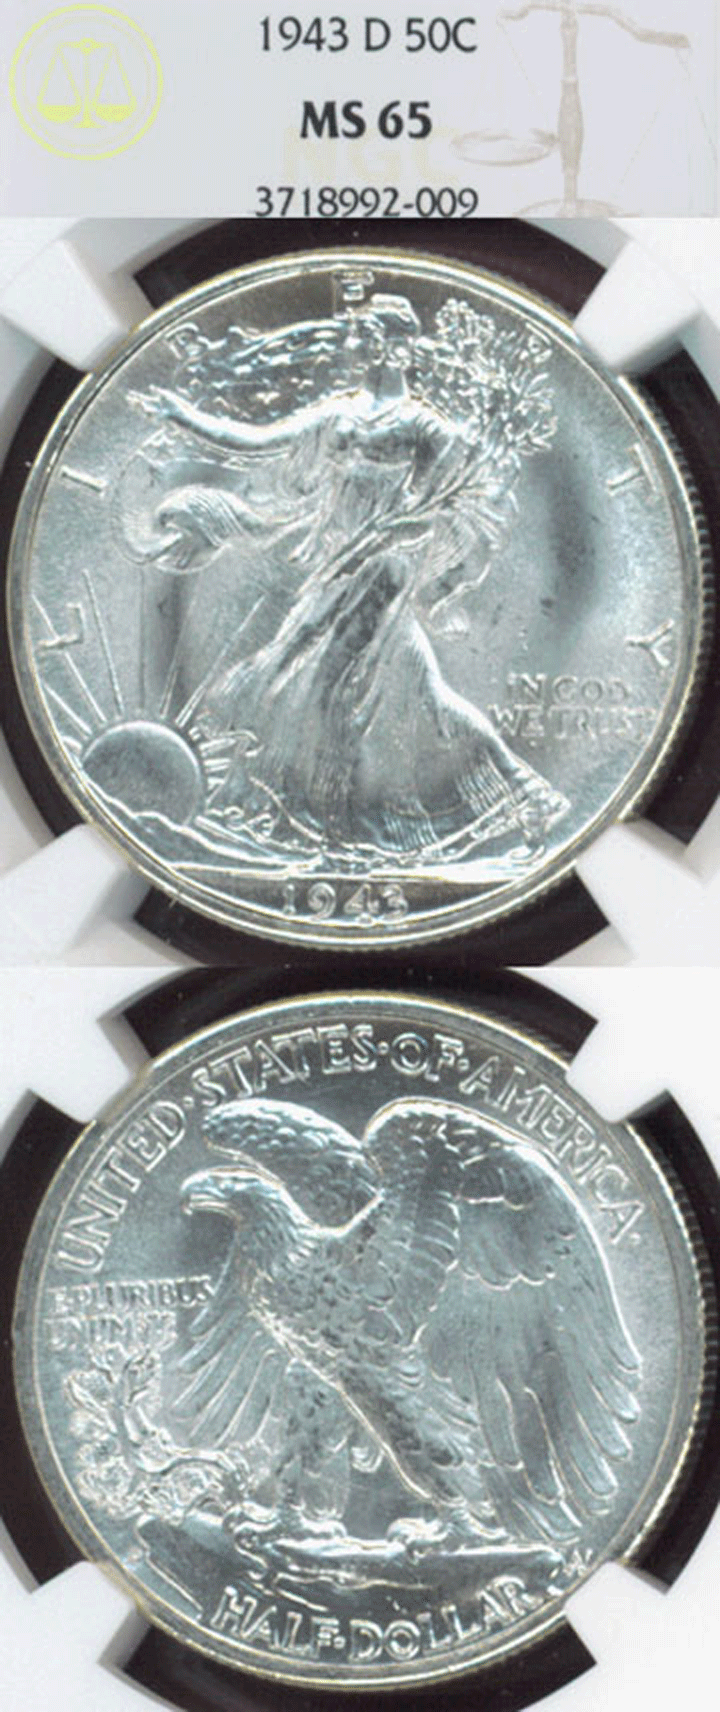 1943-D 50c MS-65 Walking liberty silver half dollar NGC MS 65